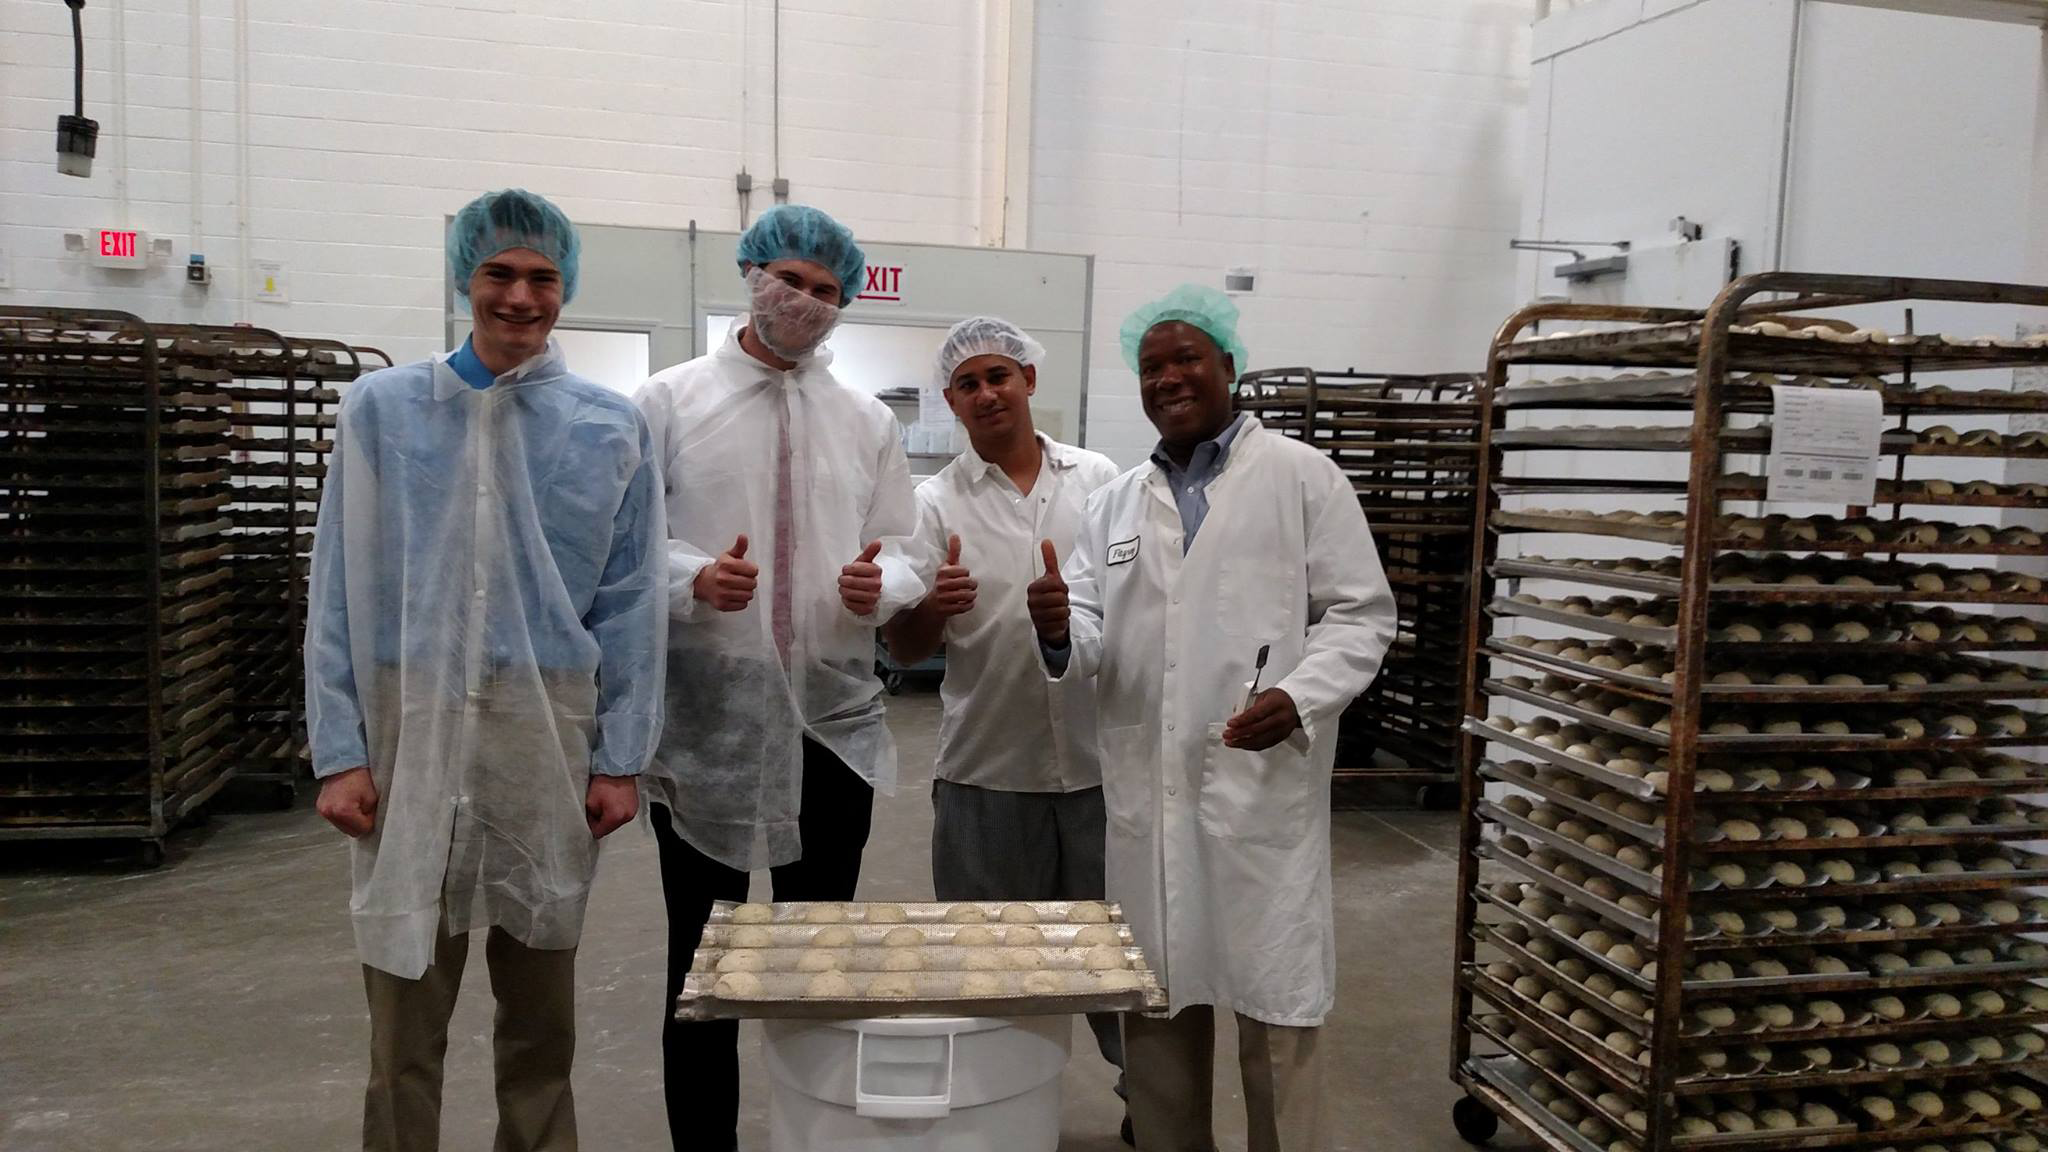 Salem Five interns working at a bakery